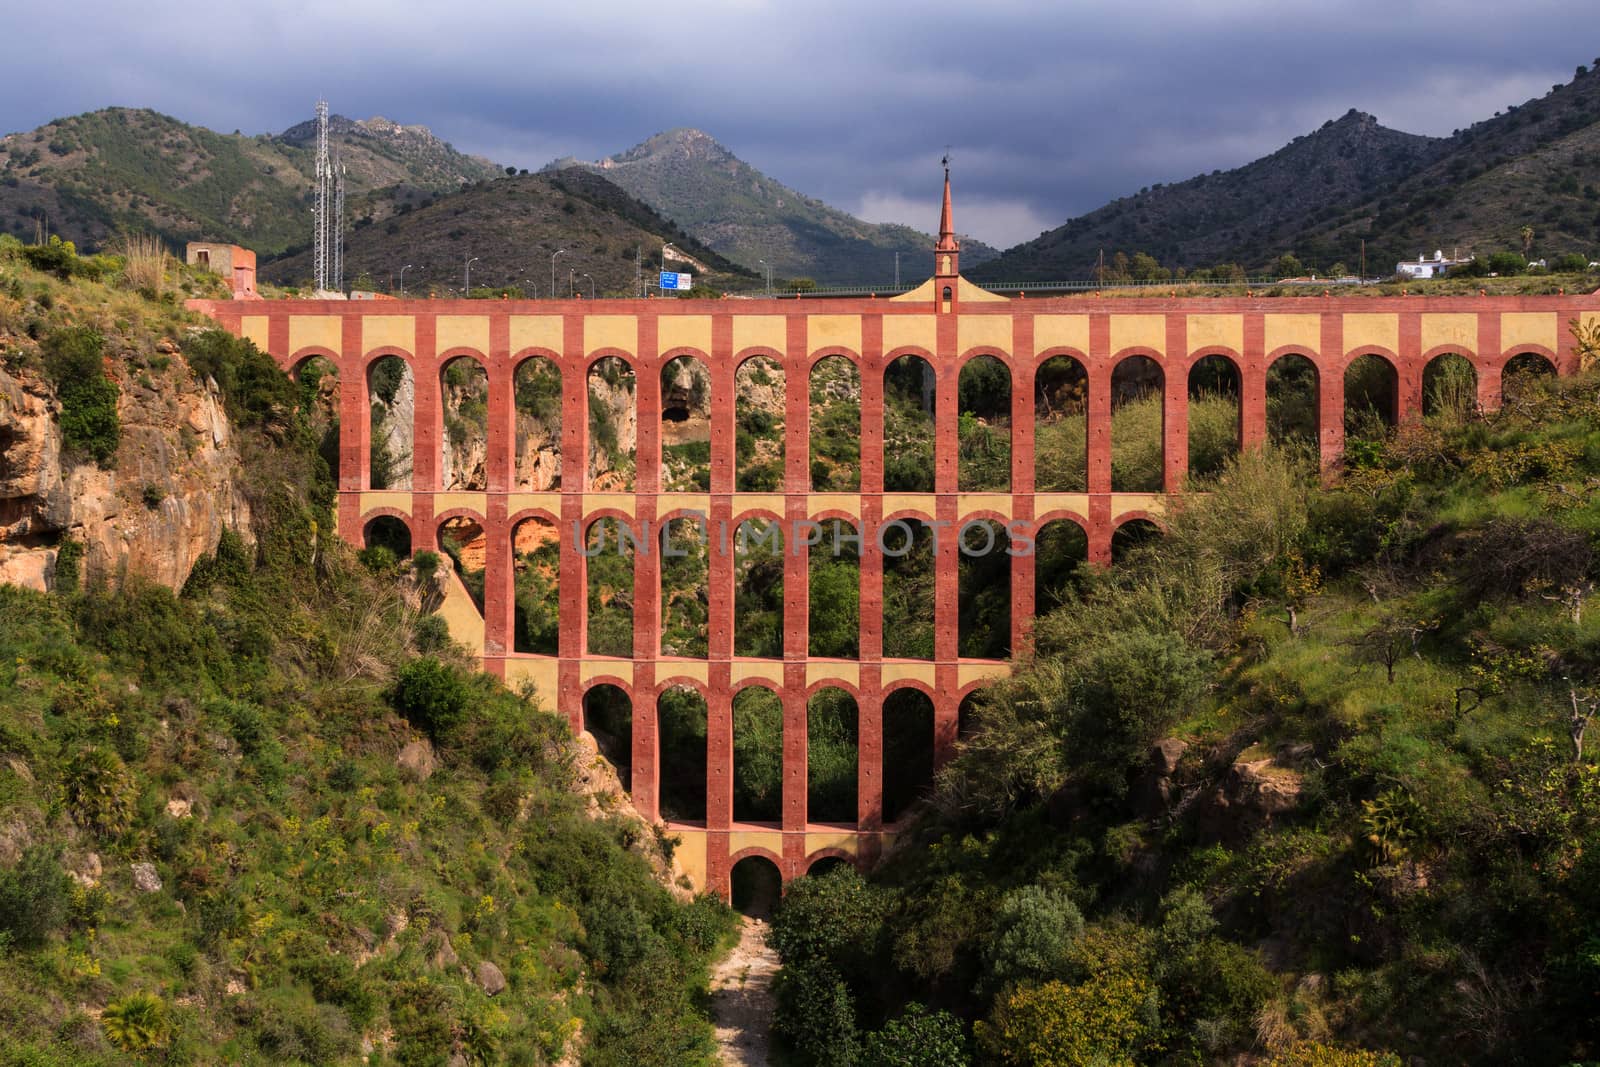 Aqueduct named El Puente del Aguila in Nerja, Costa del Sol, Andalusia, Spain